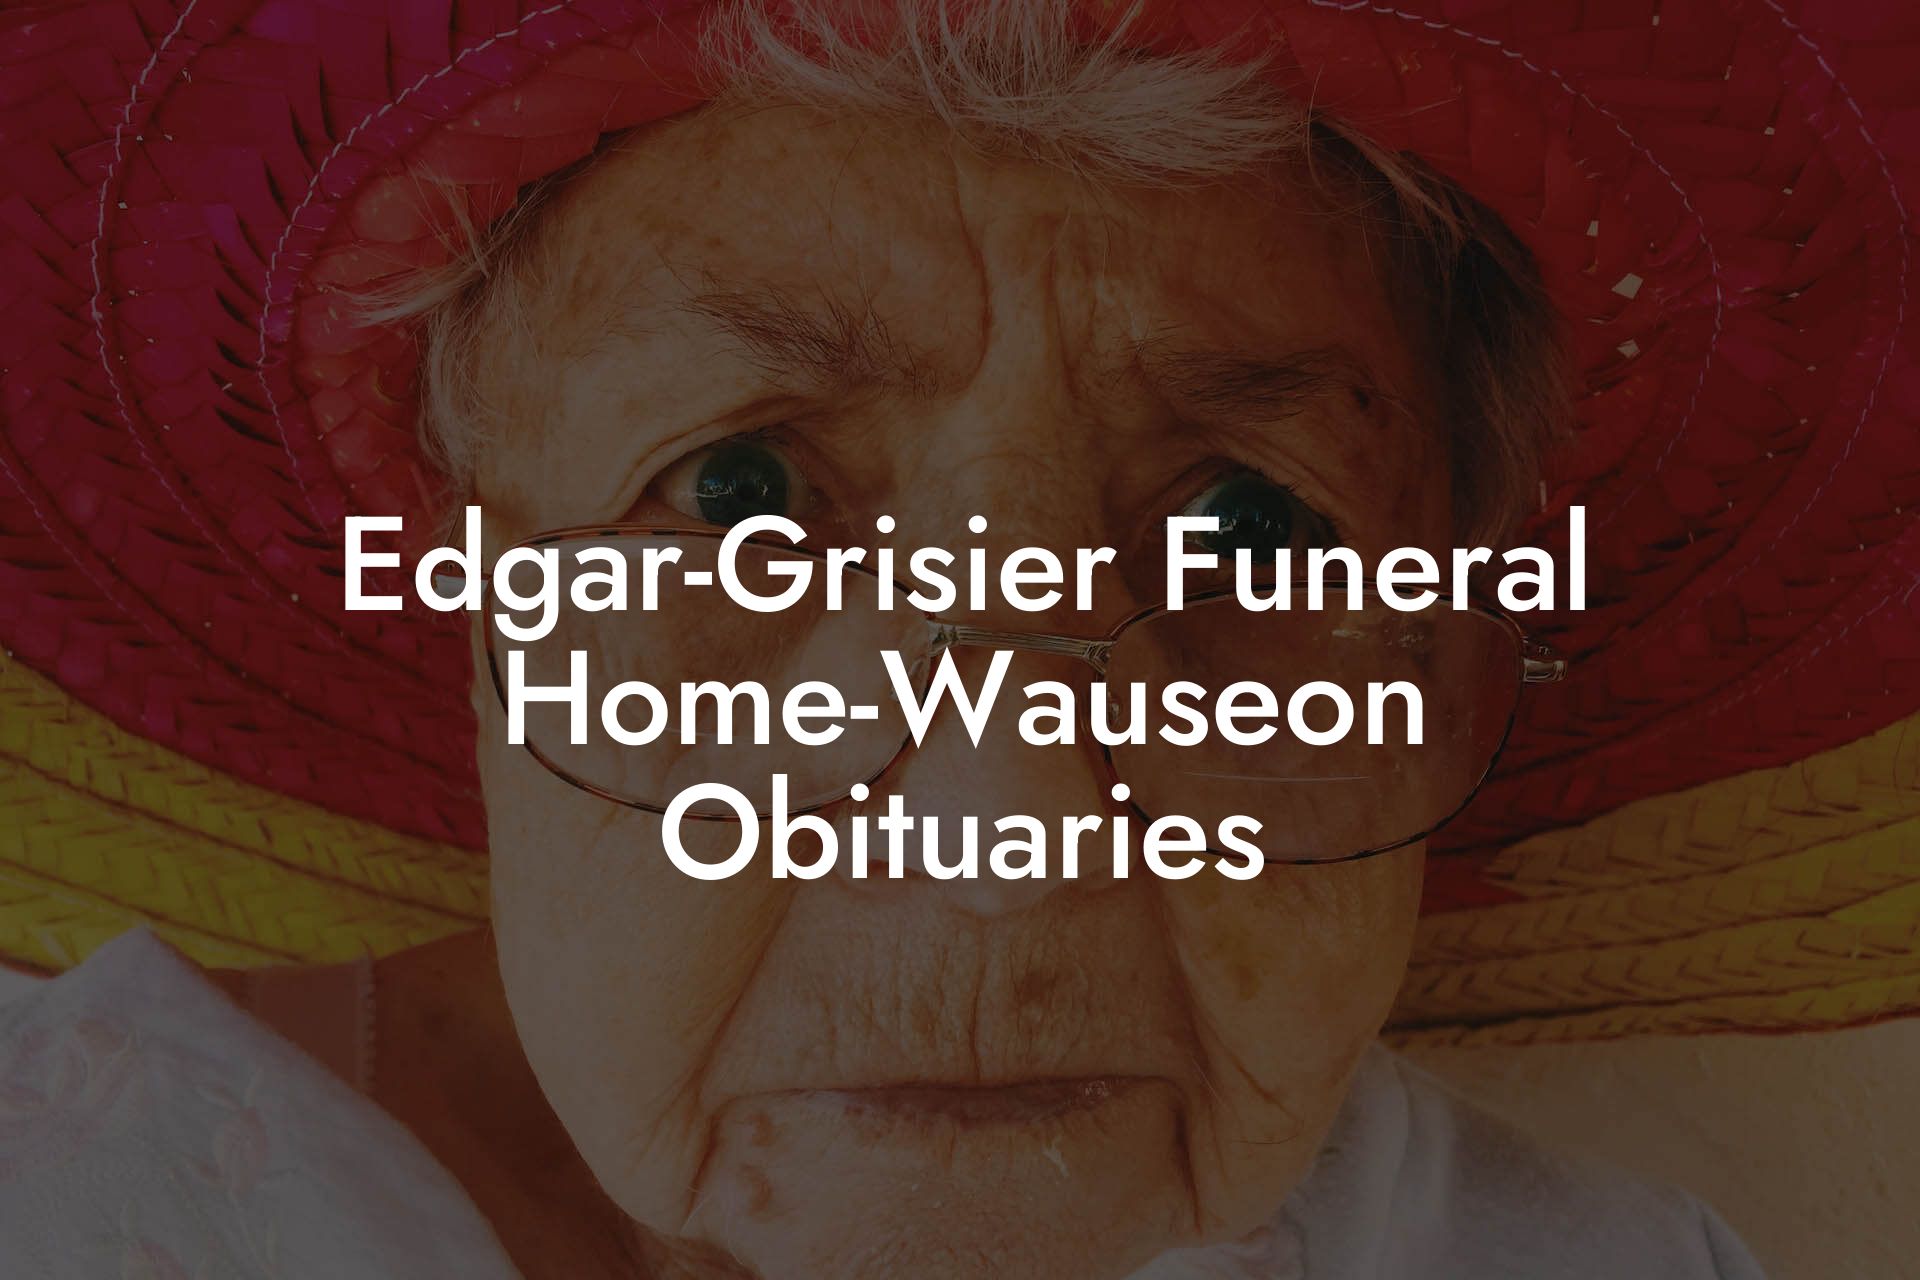 Edgar-Grisier Funeral Home-Wauseon Obituaries